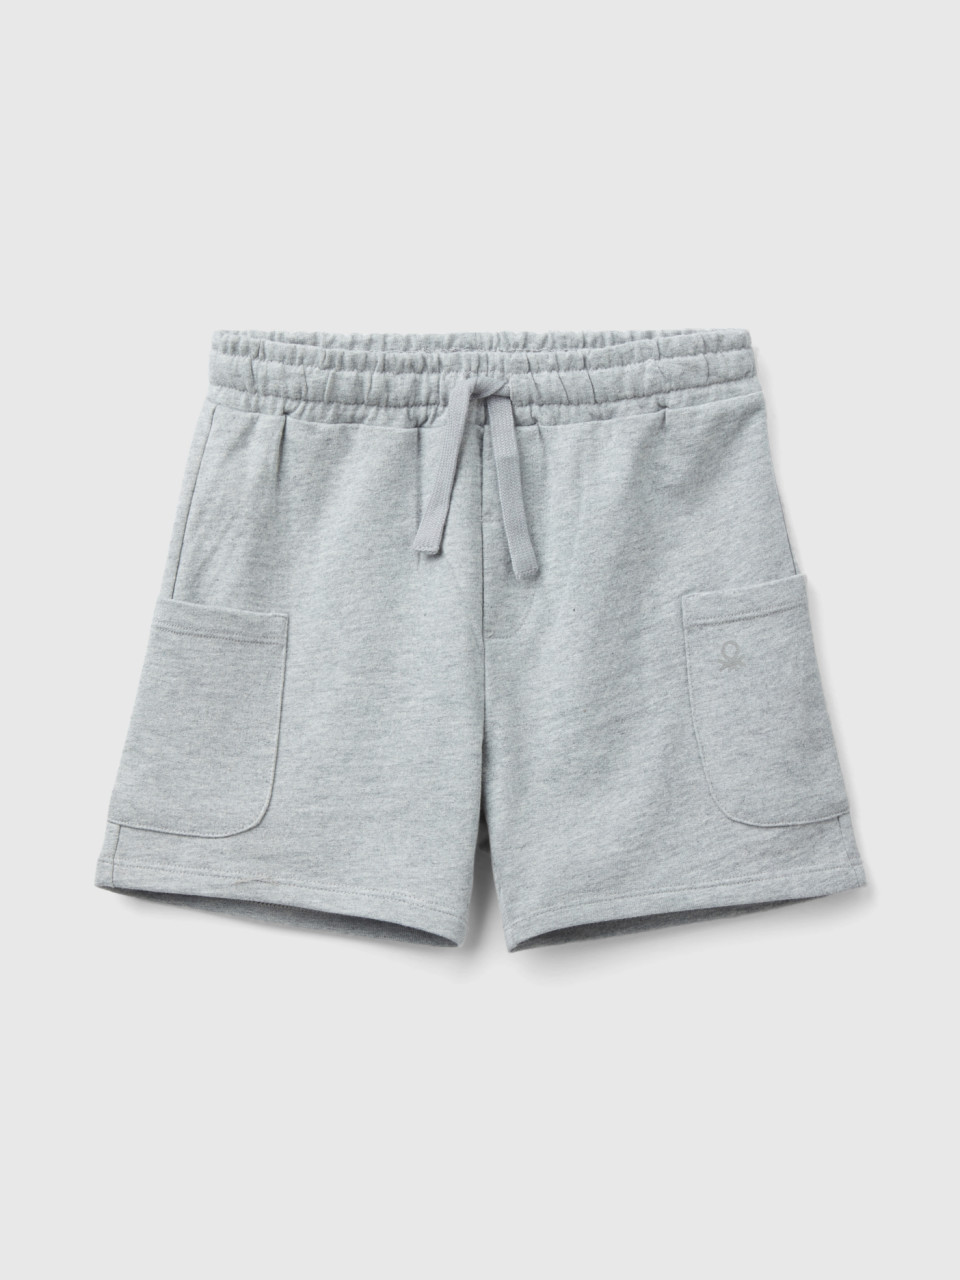 Benetton, Cargo Shorts In Organic Cotton, Light Gray, Kids